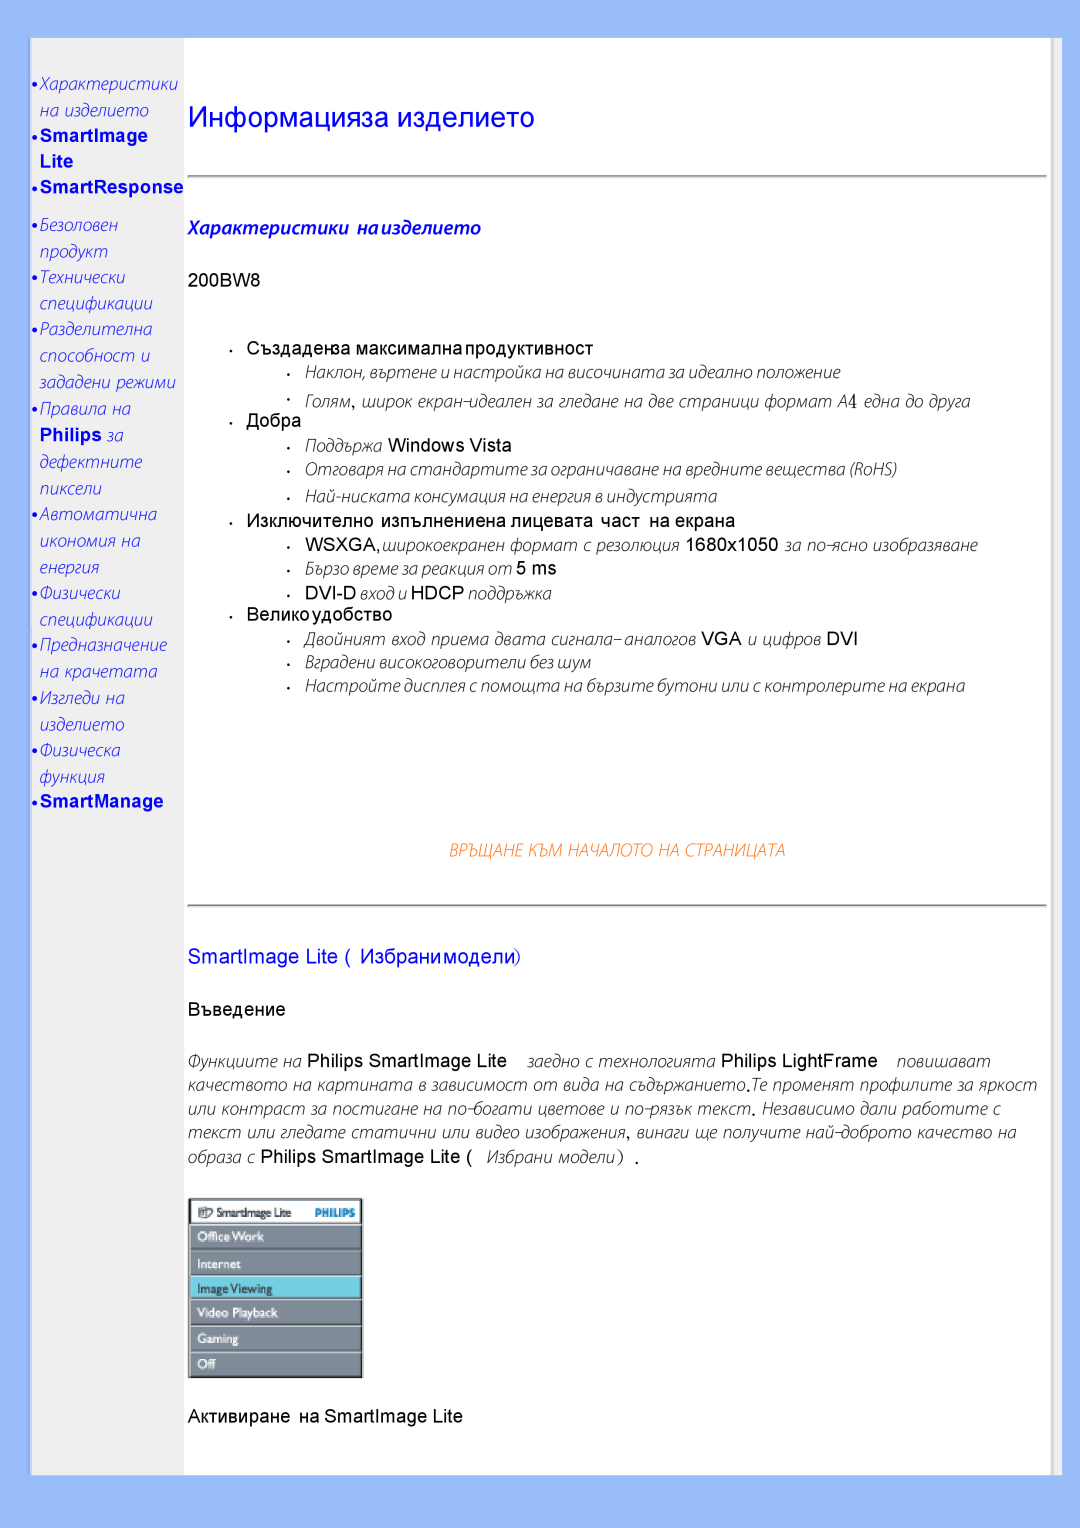 Philips 200BW8 Информацияза изделието, Характеристики наизделието, SmartImage Lite Избранимодели, Правила на, SmartManage 